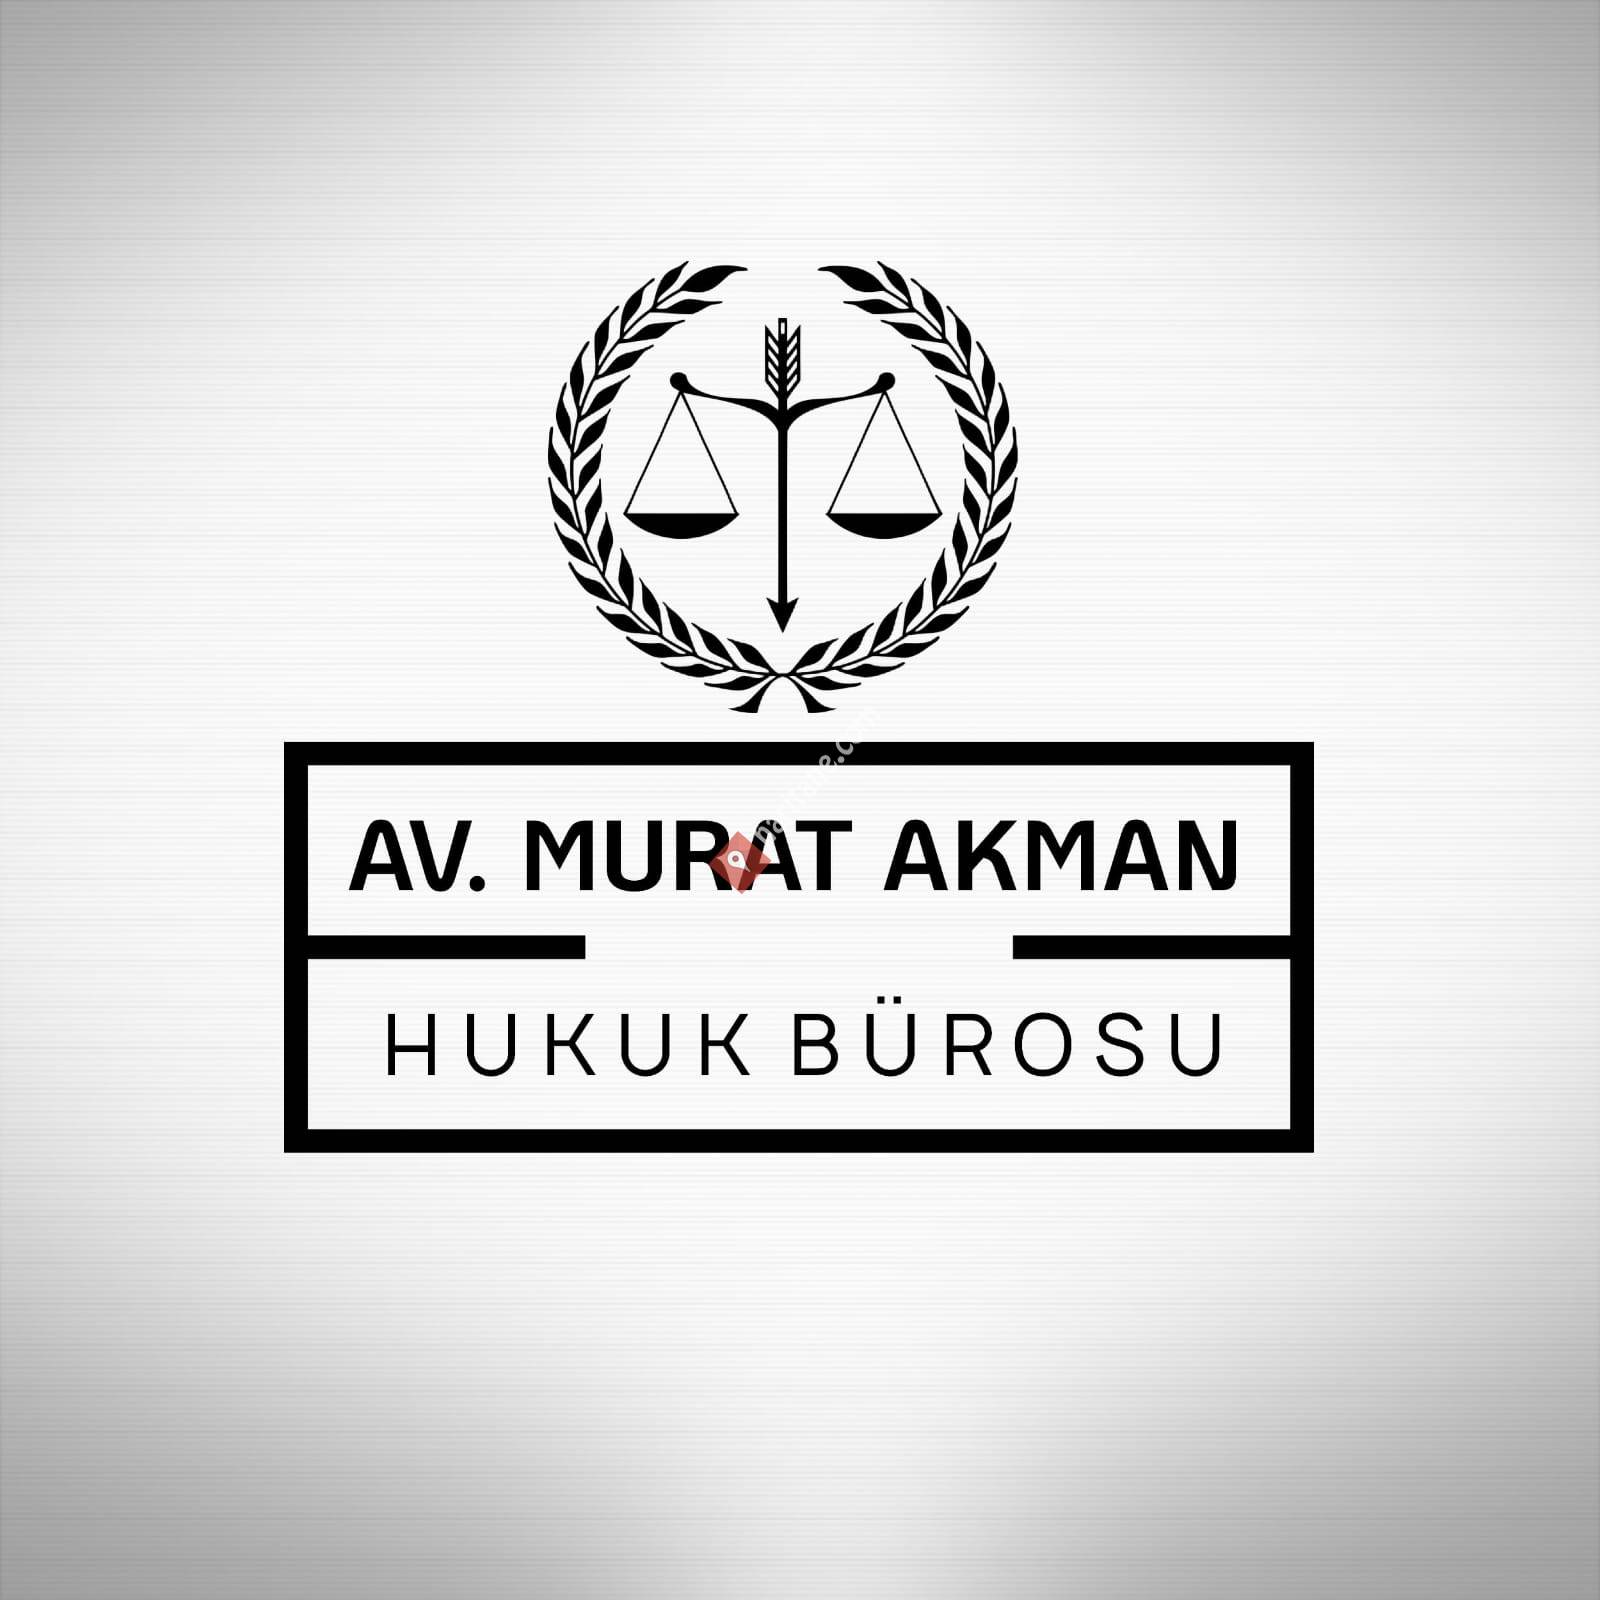 Avukat Murat Akman Hukuk Bürosu